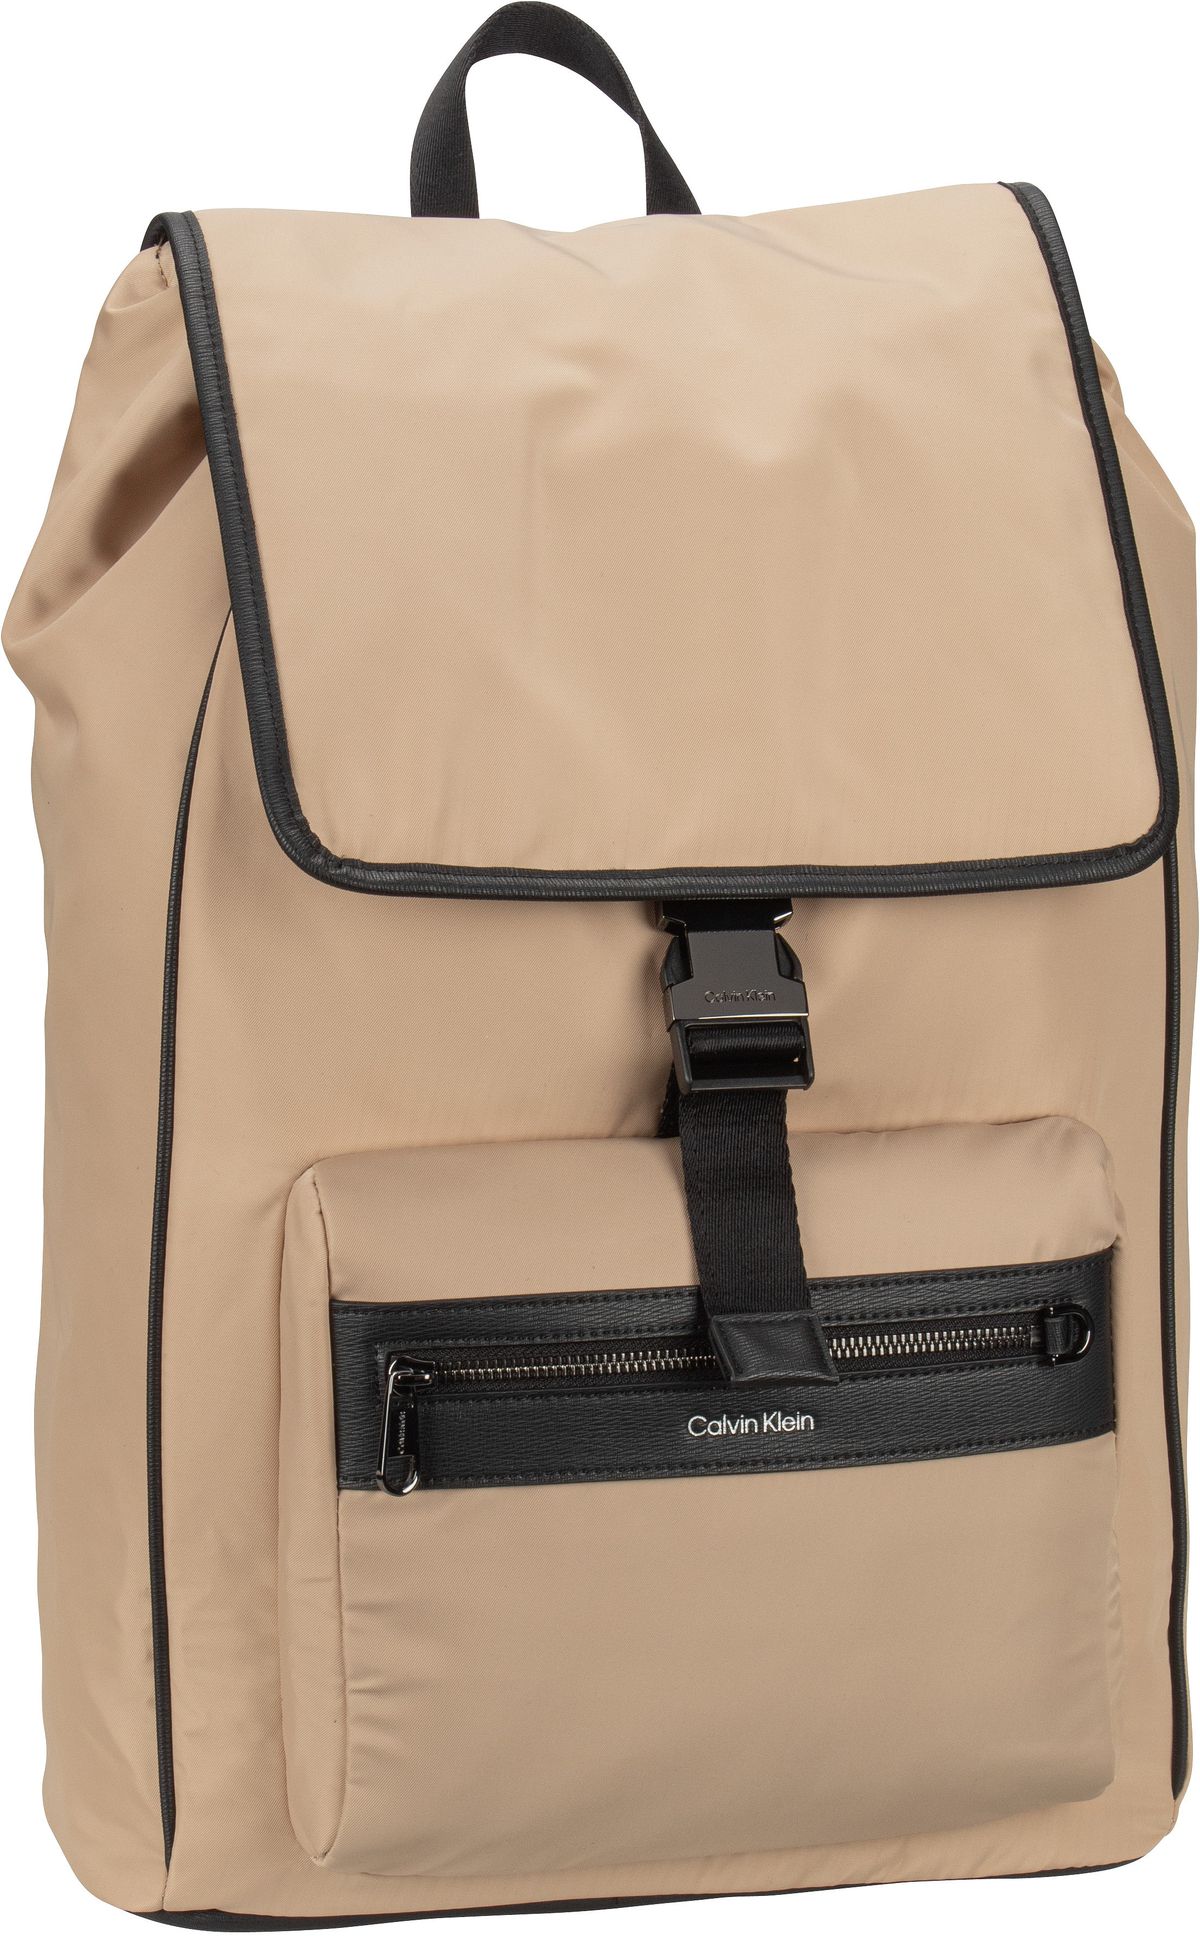 Calvin Klein CK Elevated Flap Backpack PSP23 - Tavertine